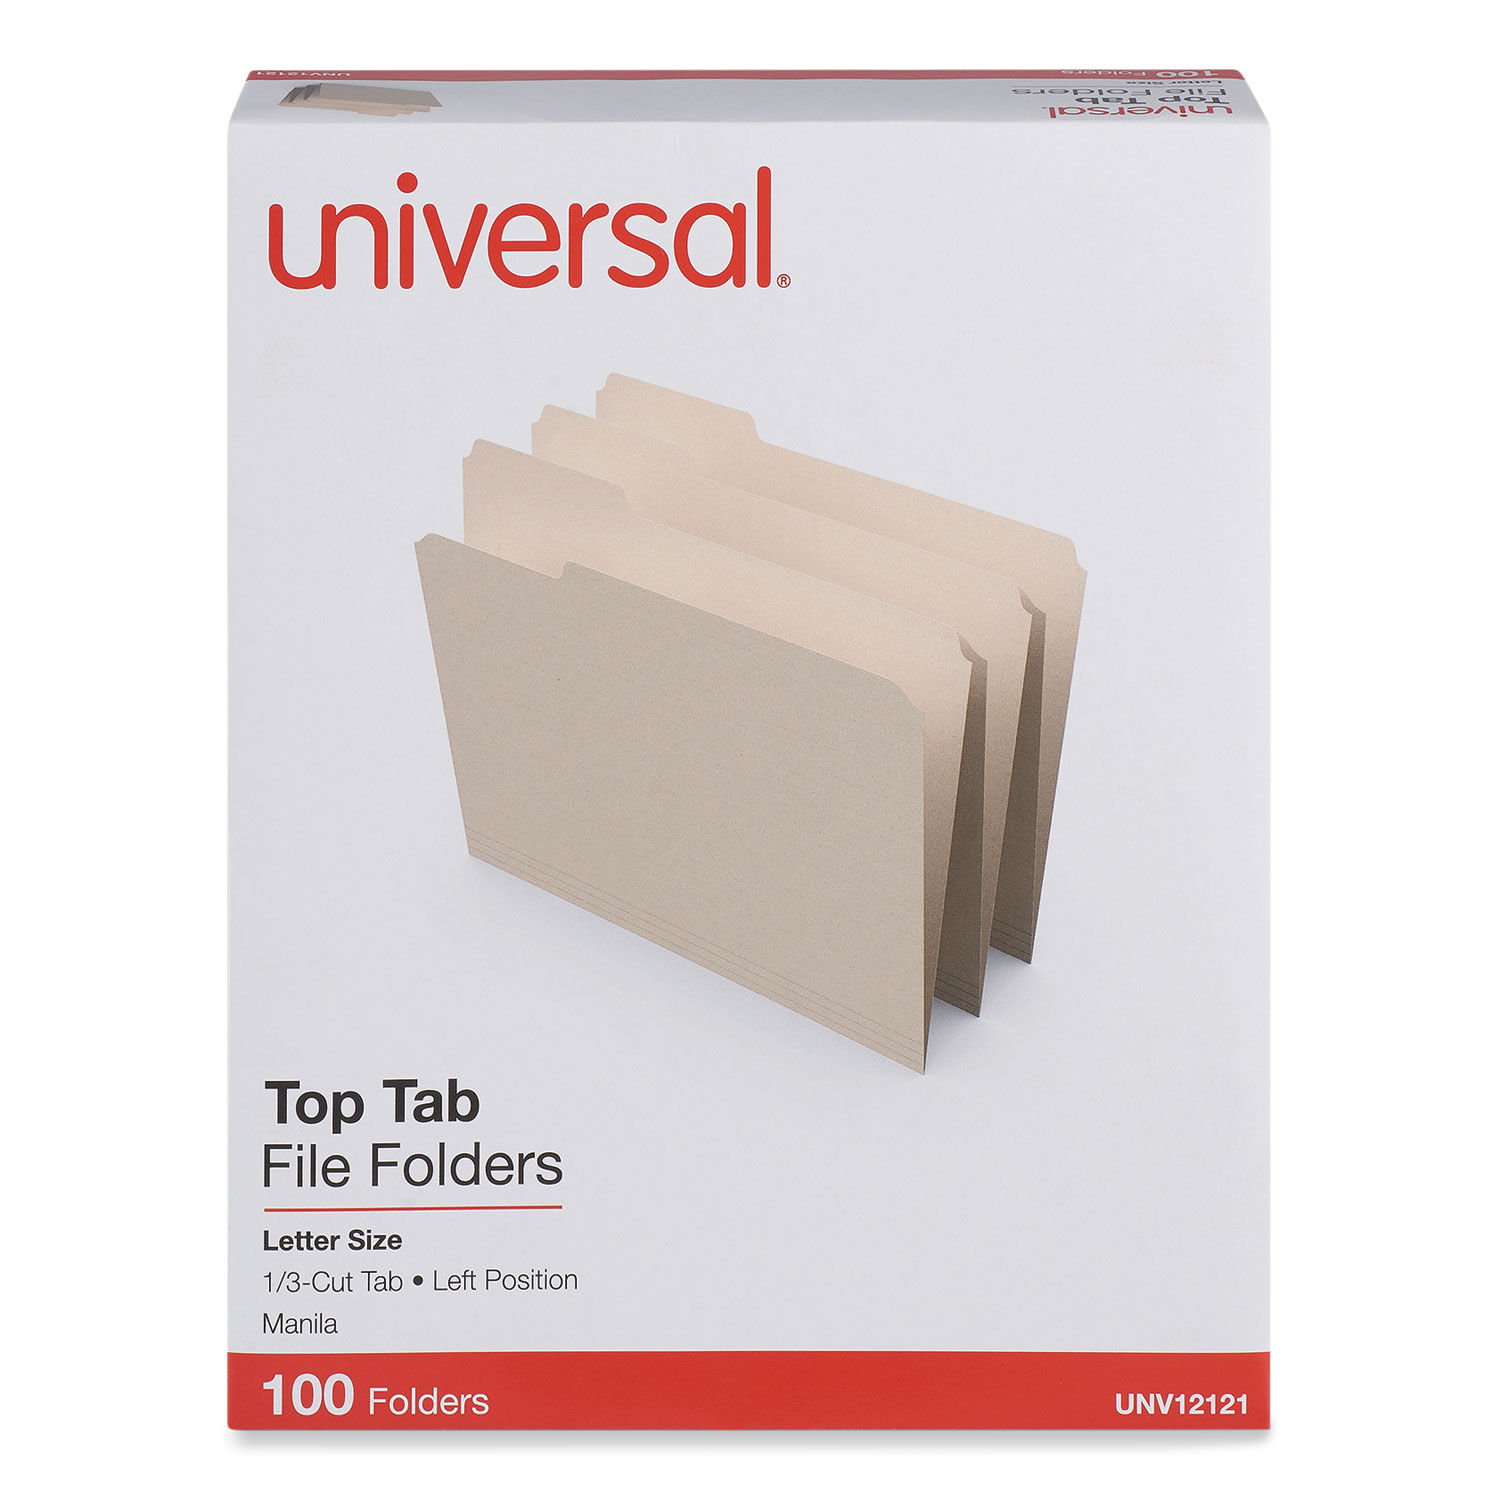 Top Tab File Folders by Universalandreg; UNV12121